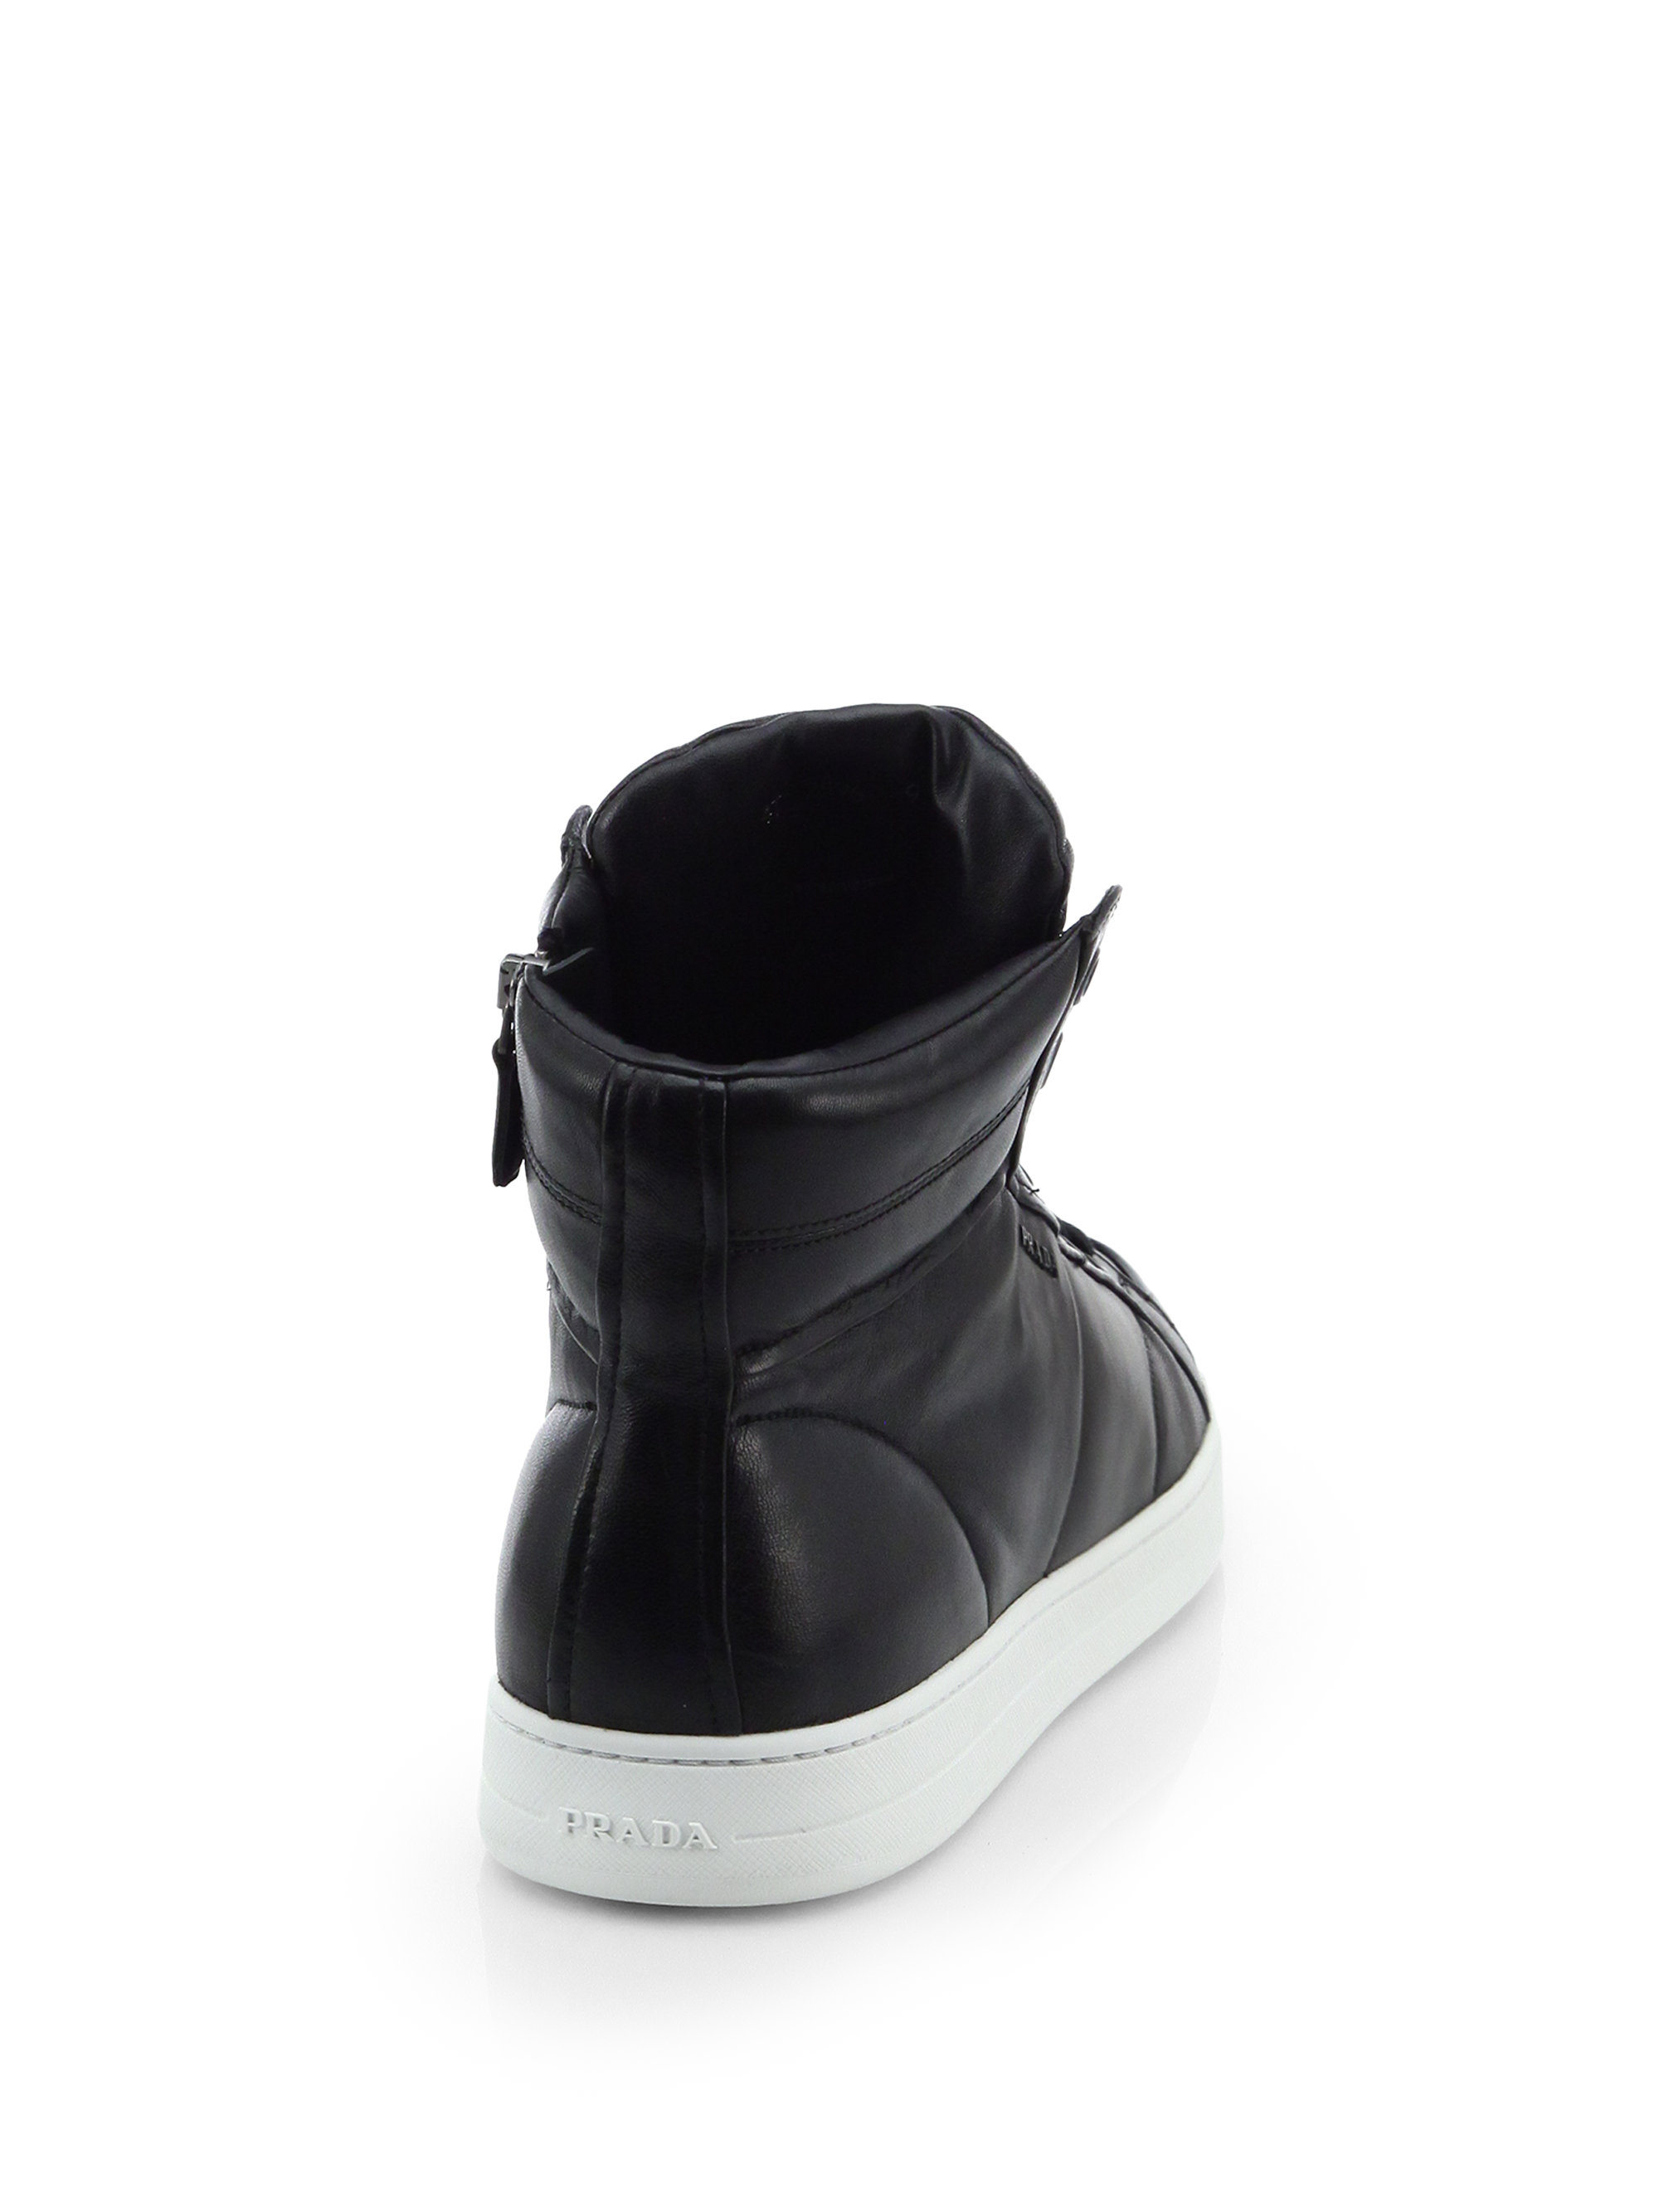 Lyst Prada Leather High Top Sneakers In Black For Men